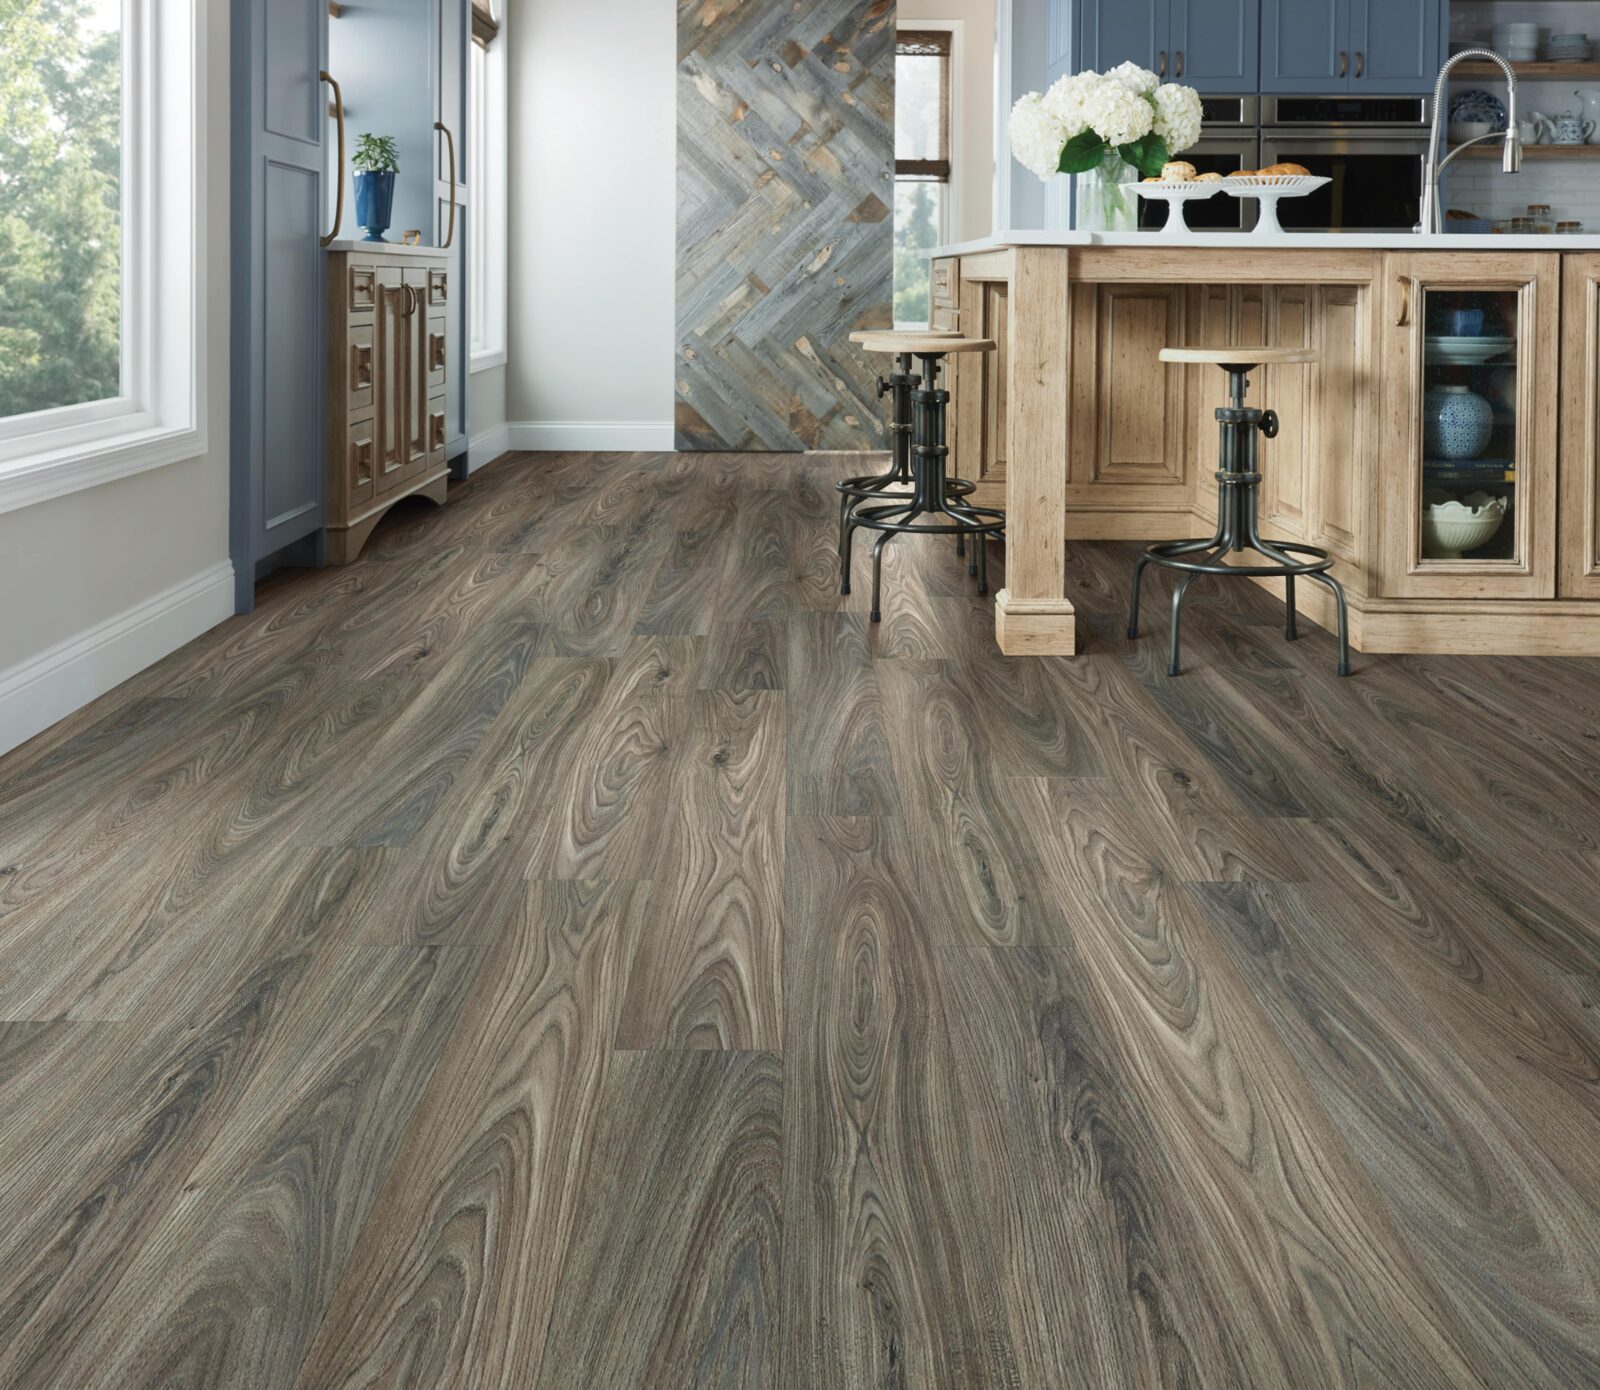 Luxury Vinyl Flooring in Kitchen | Carpetland USA